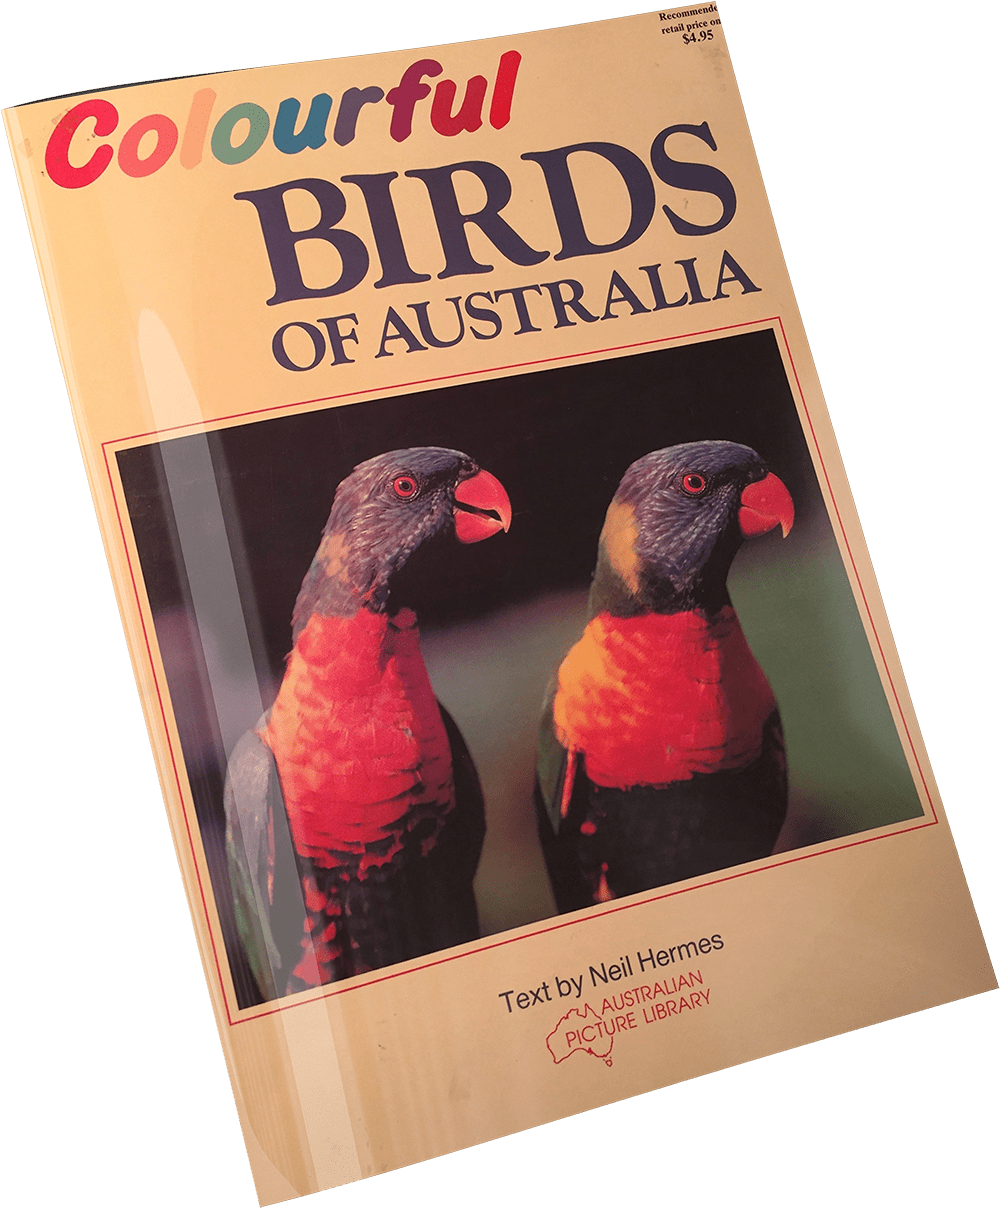 Neil Hermes Book: Colourful Birds of Australia